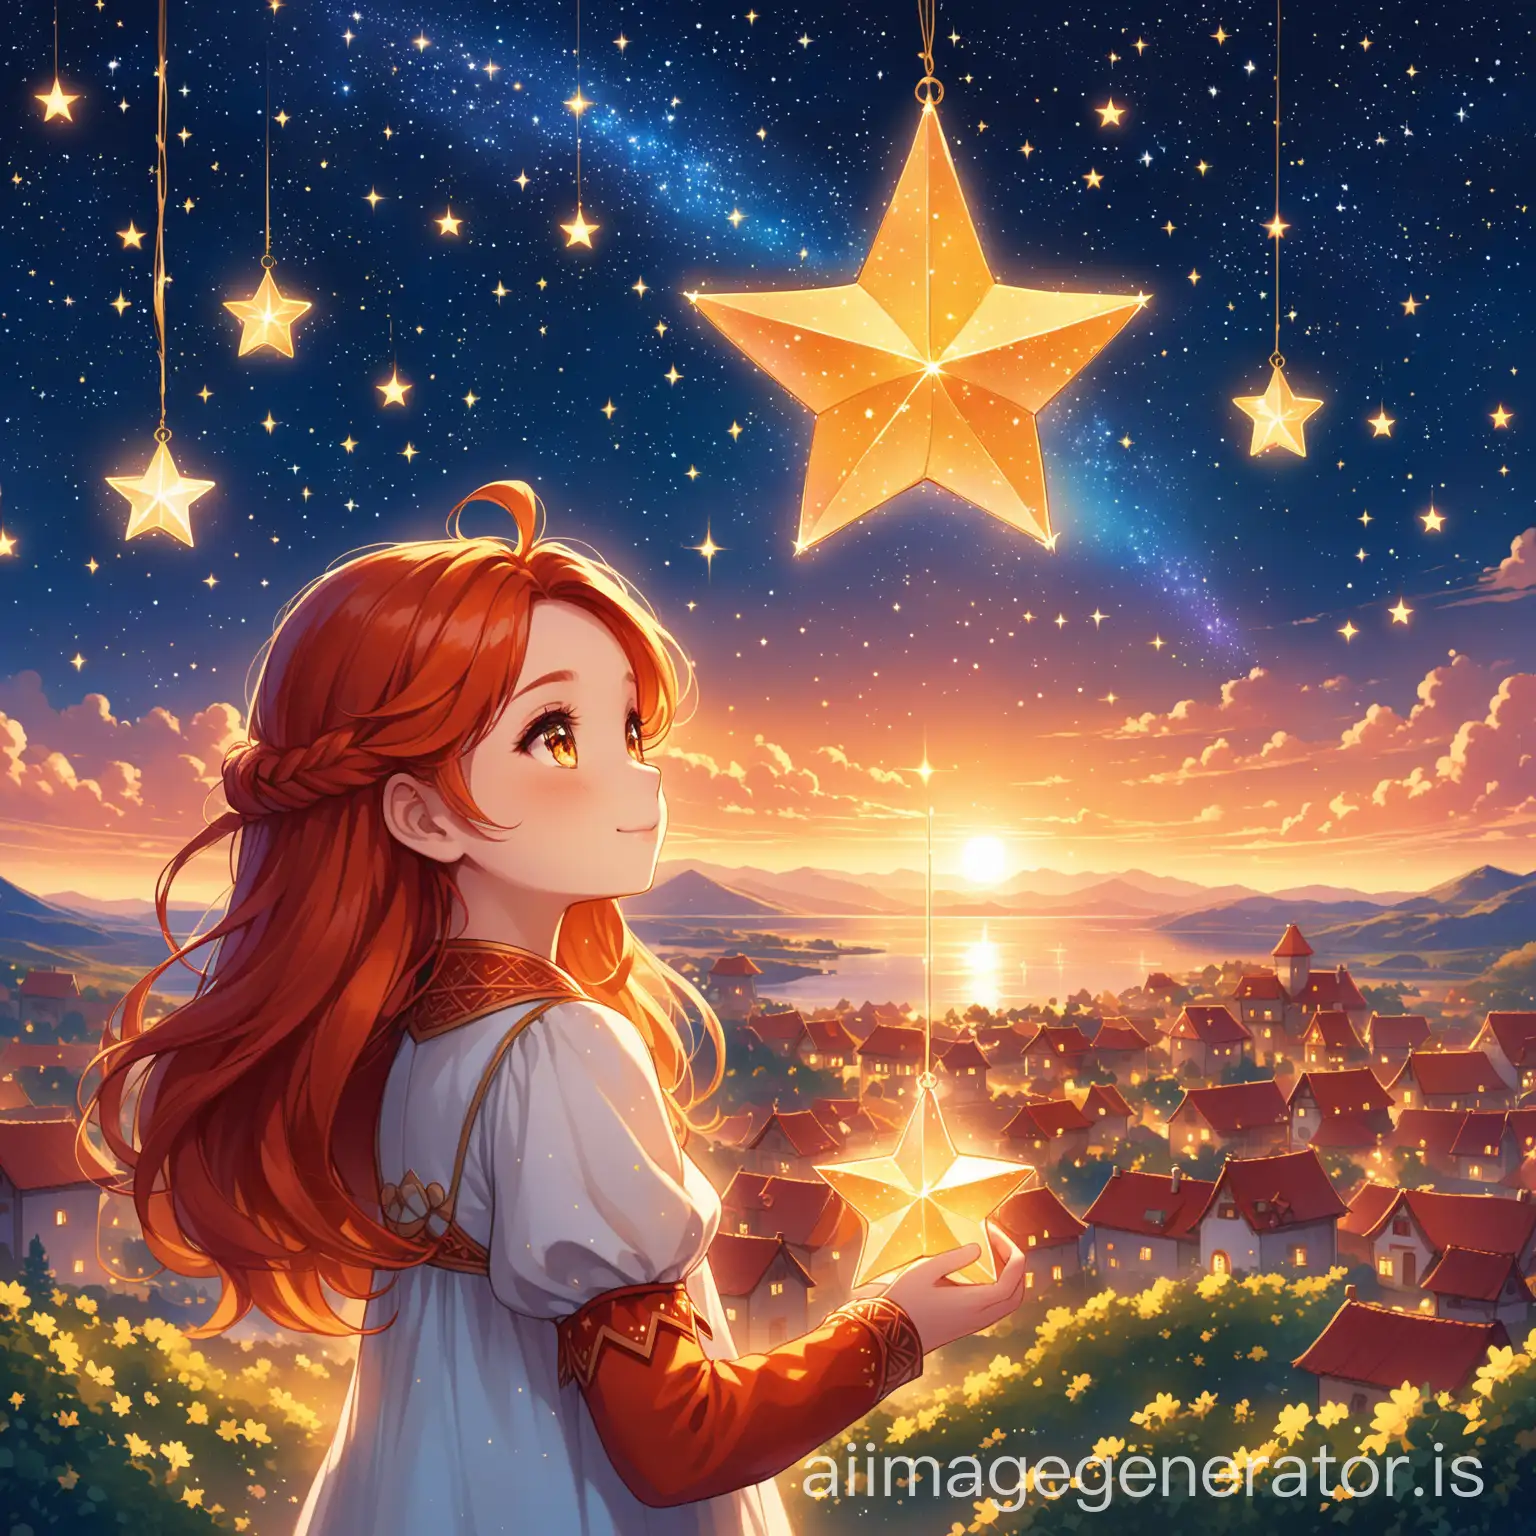 Lovable-Girl-Dreaming-of-Stars-Linas-Wish